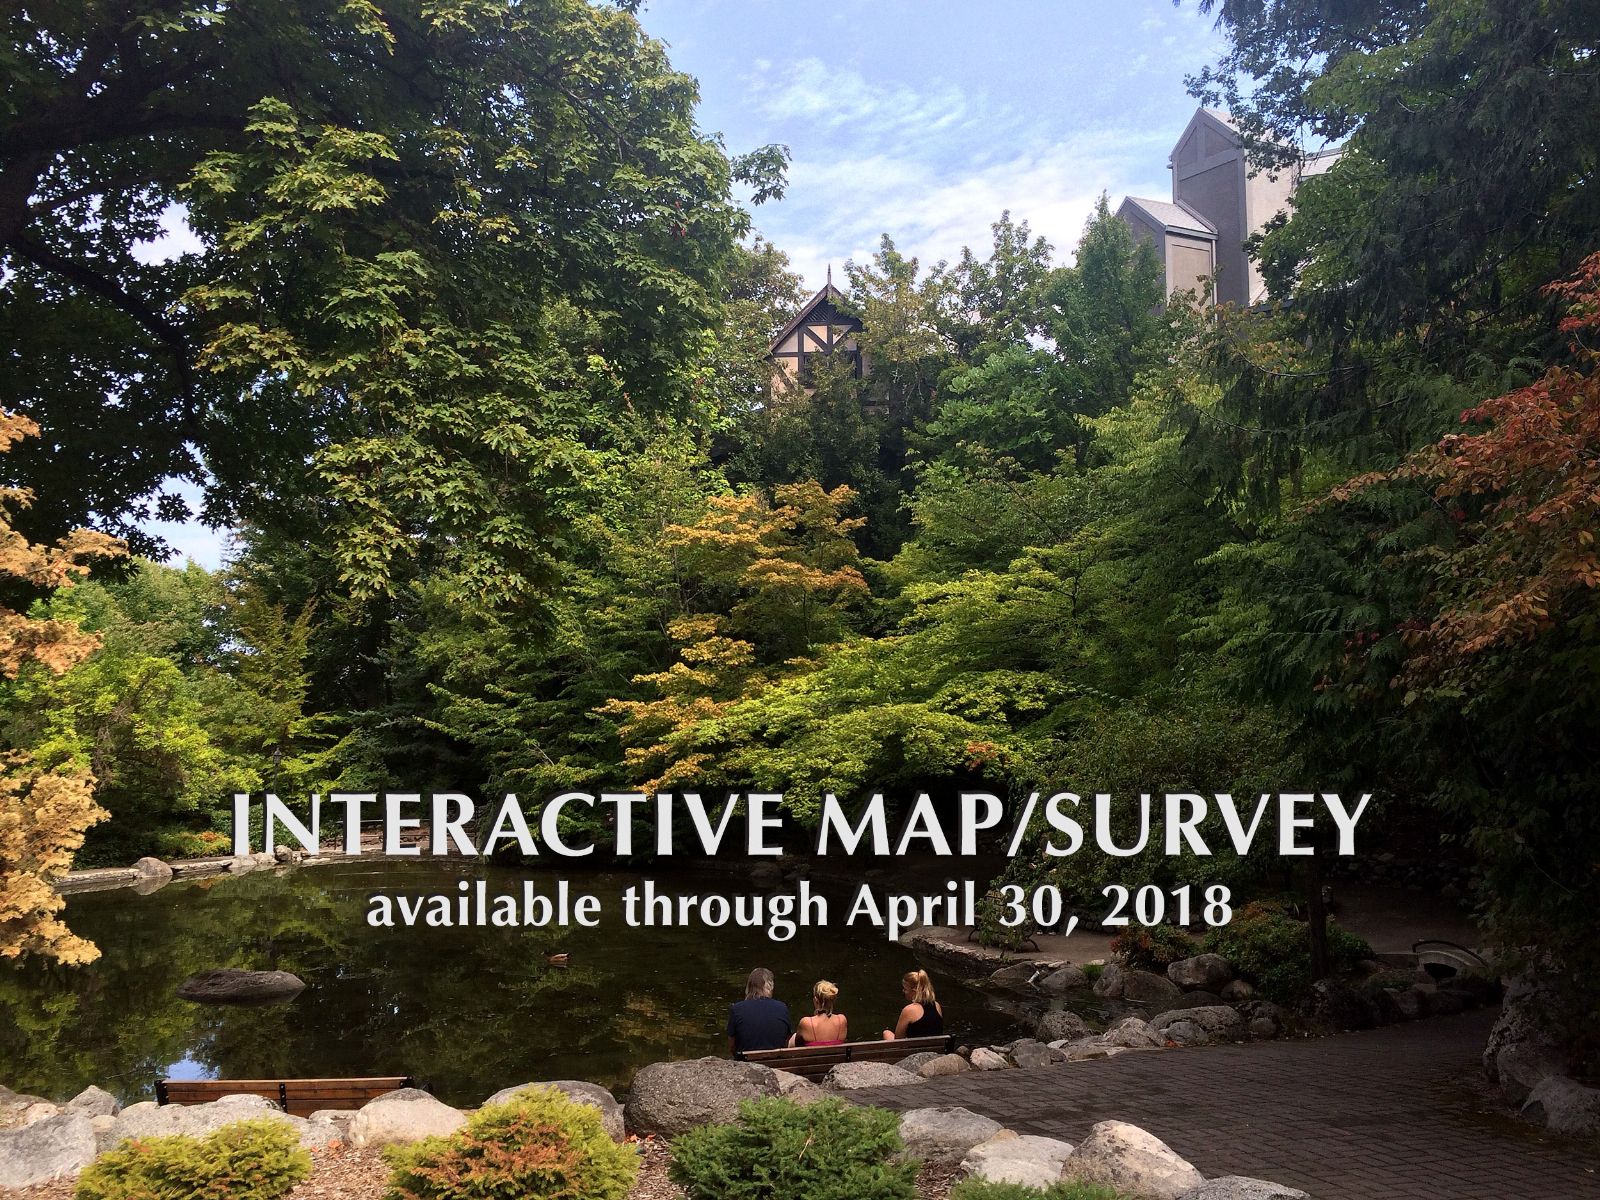 Lithia Park Master Plan Interactive Map/Survey